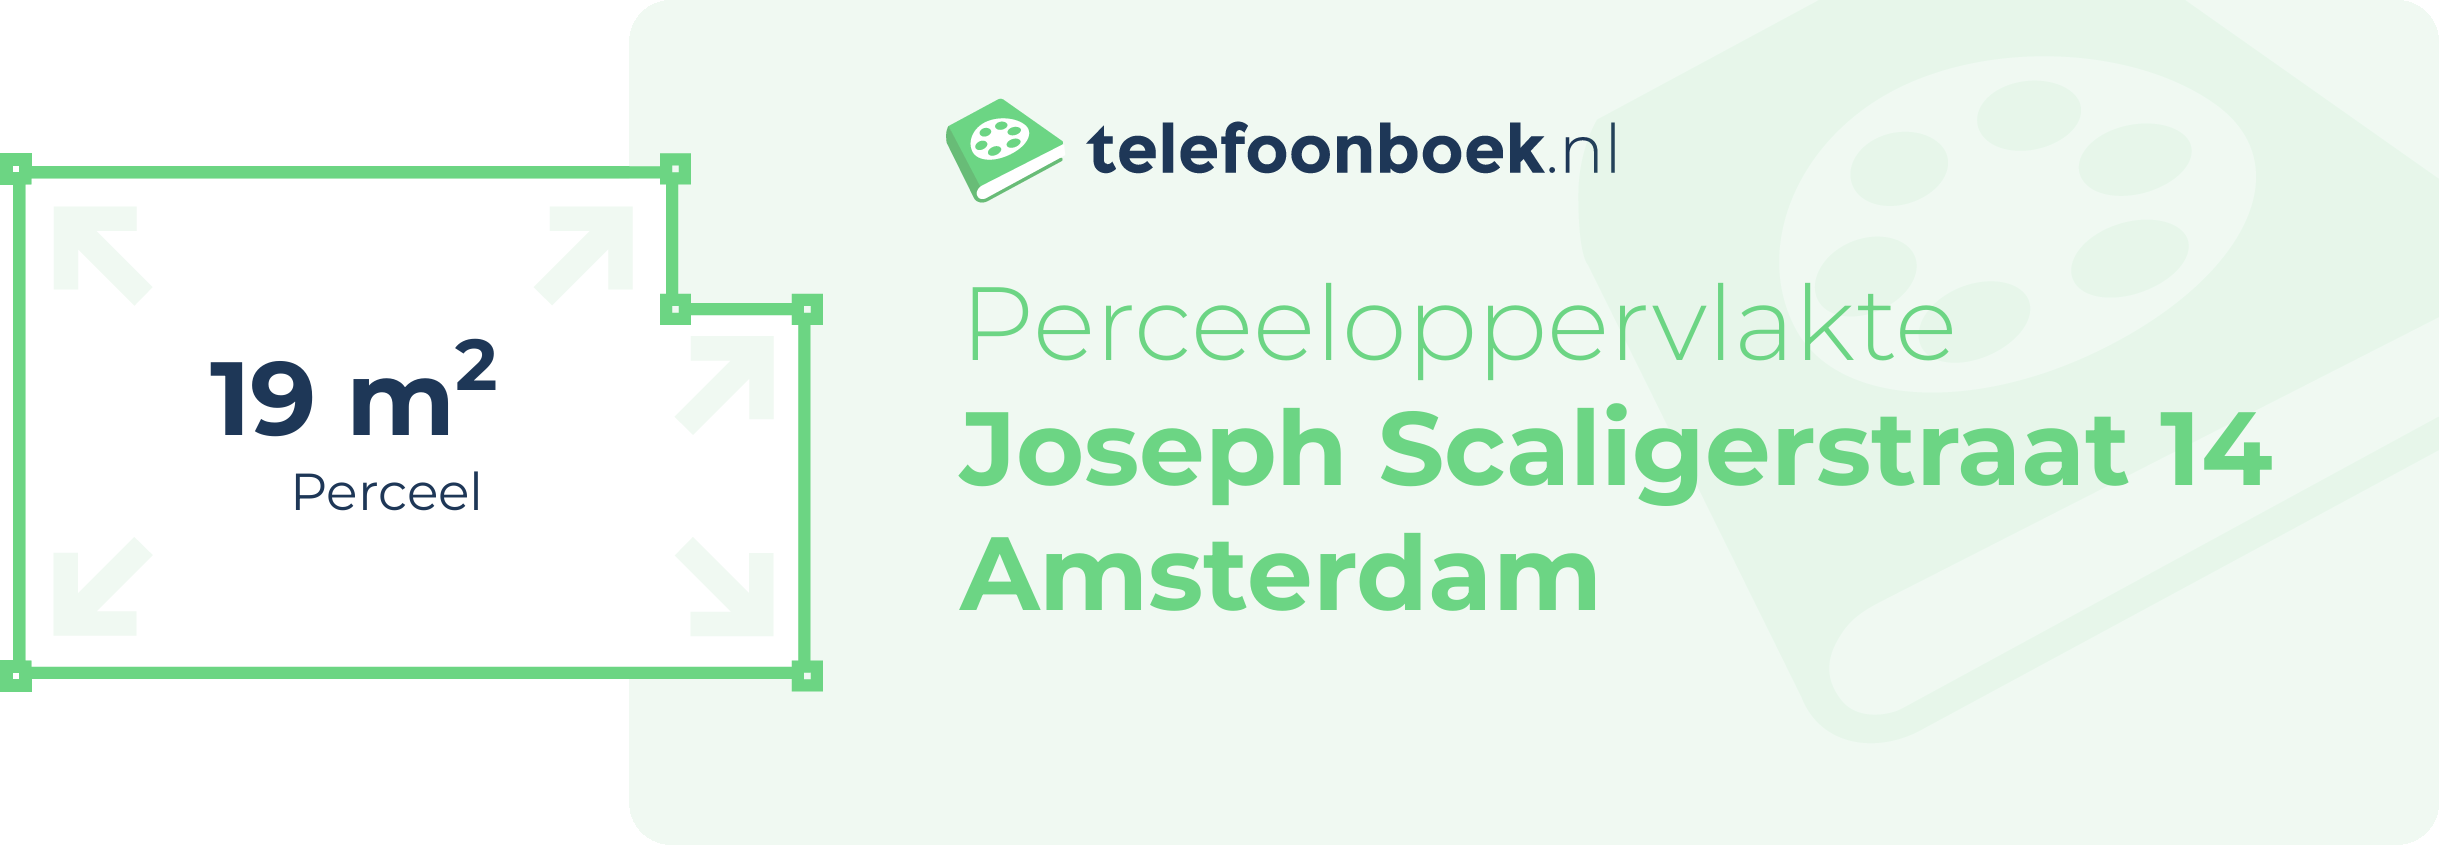 Perceeloppervlakte Joseph Scaligerstraat 14 Amsterdam